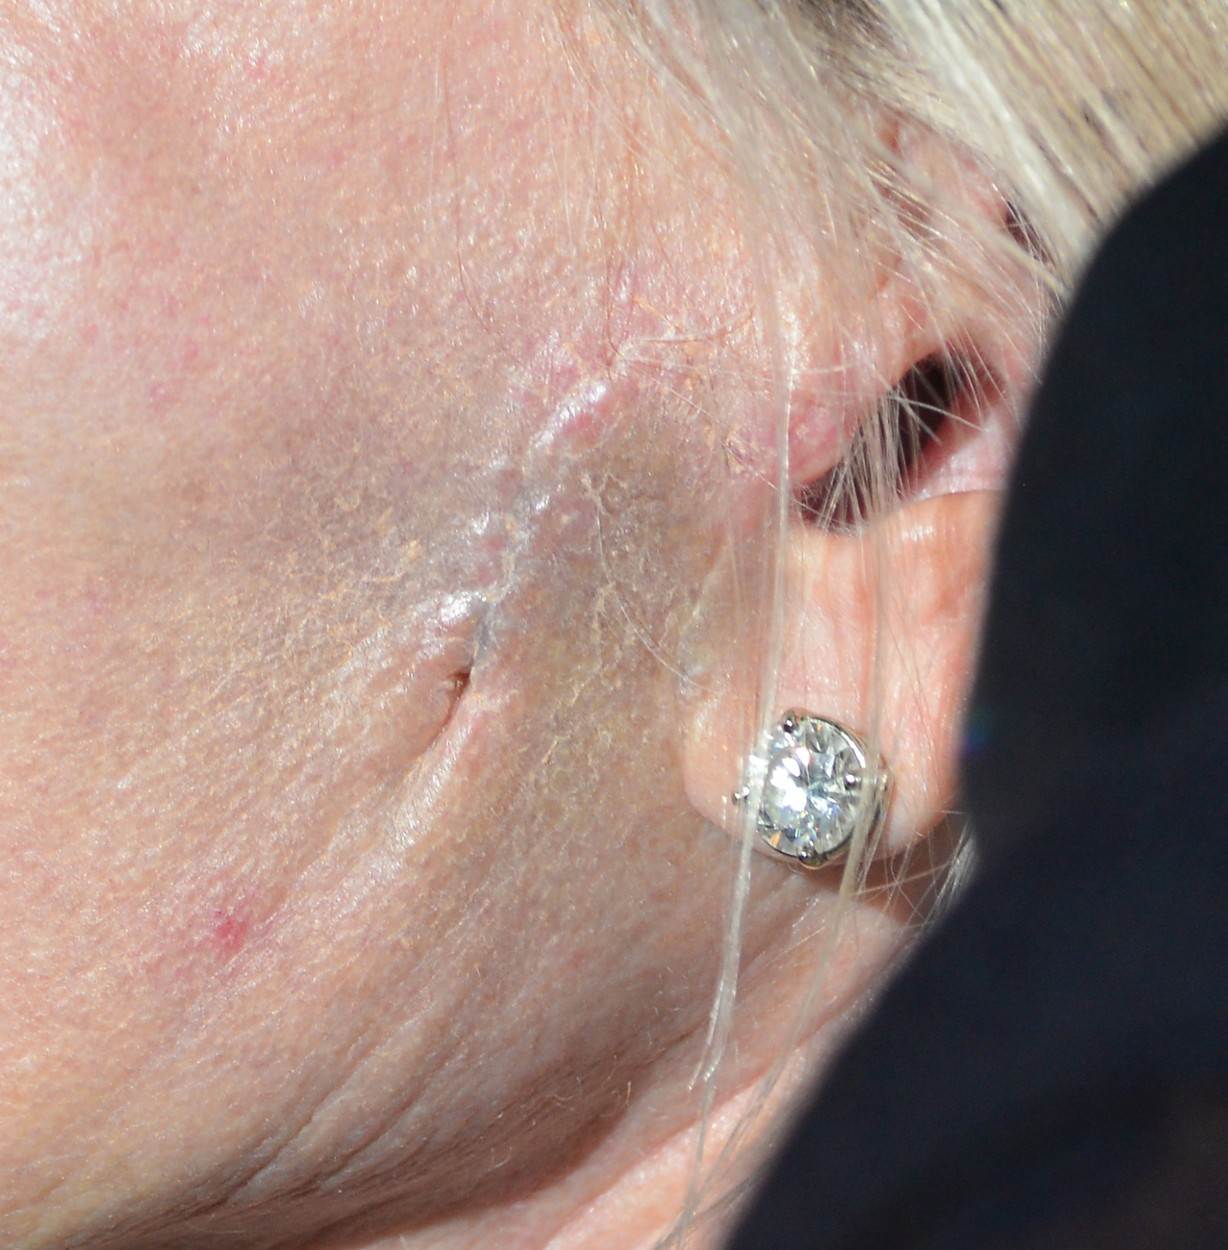  melani grifit pokazala je ogroman ožiljak na licu. 